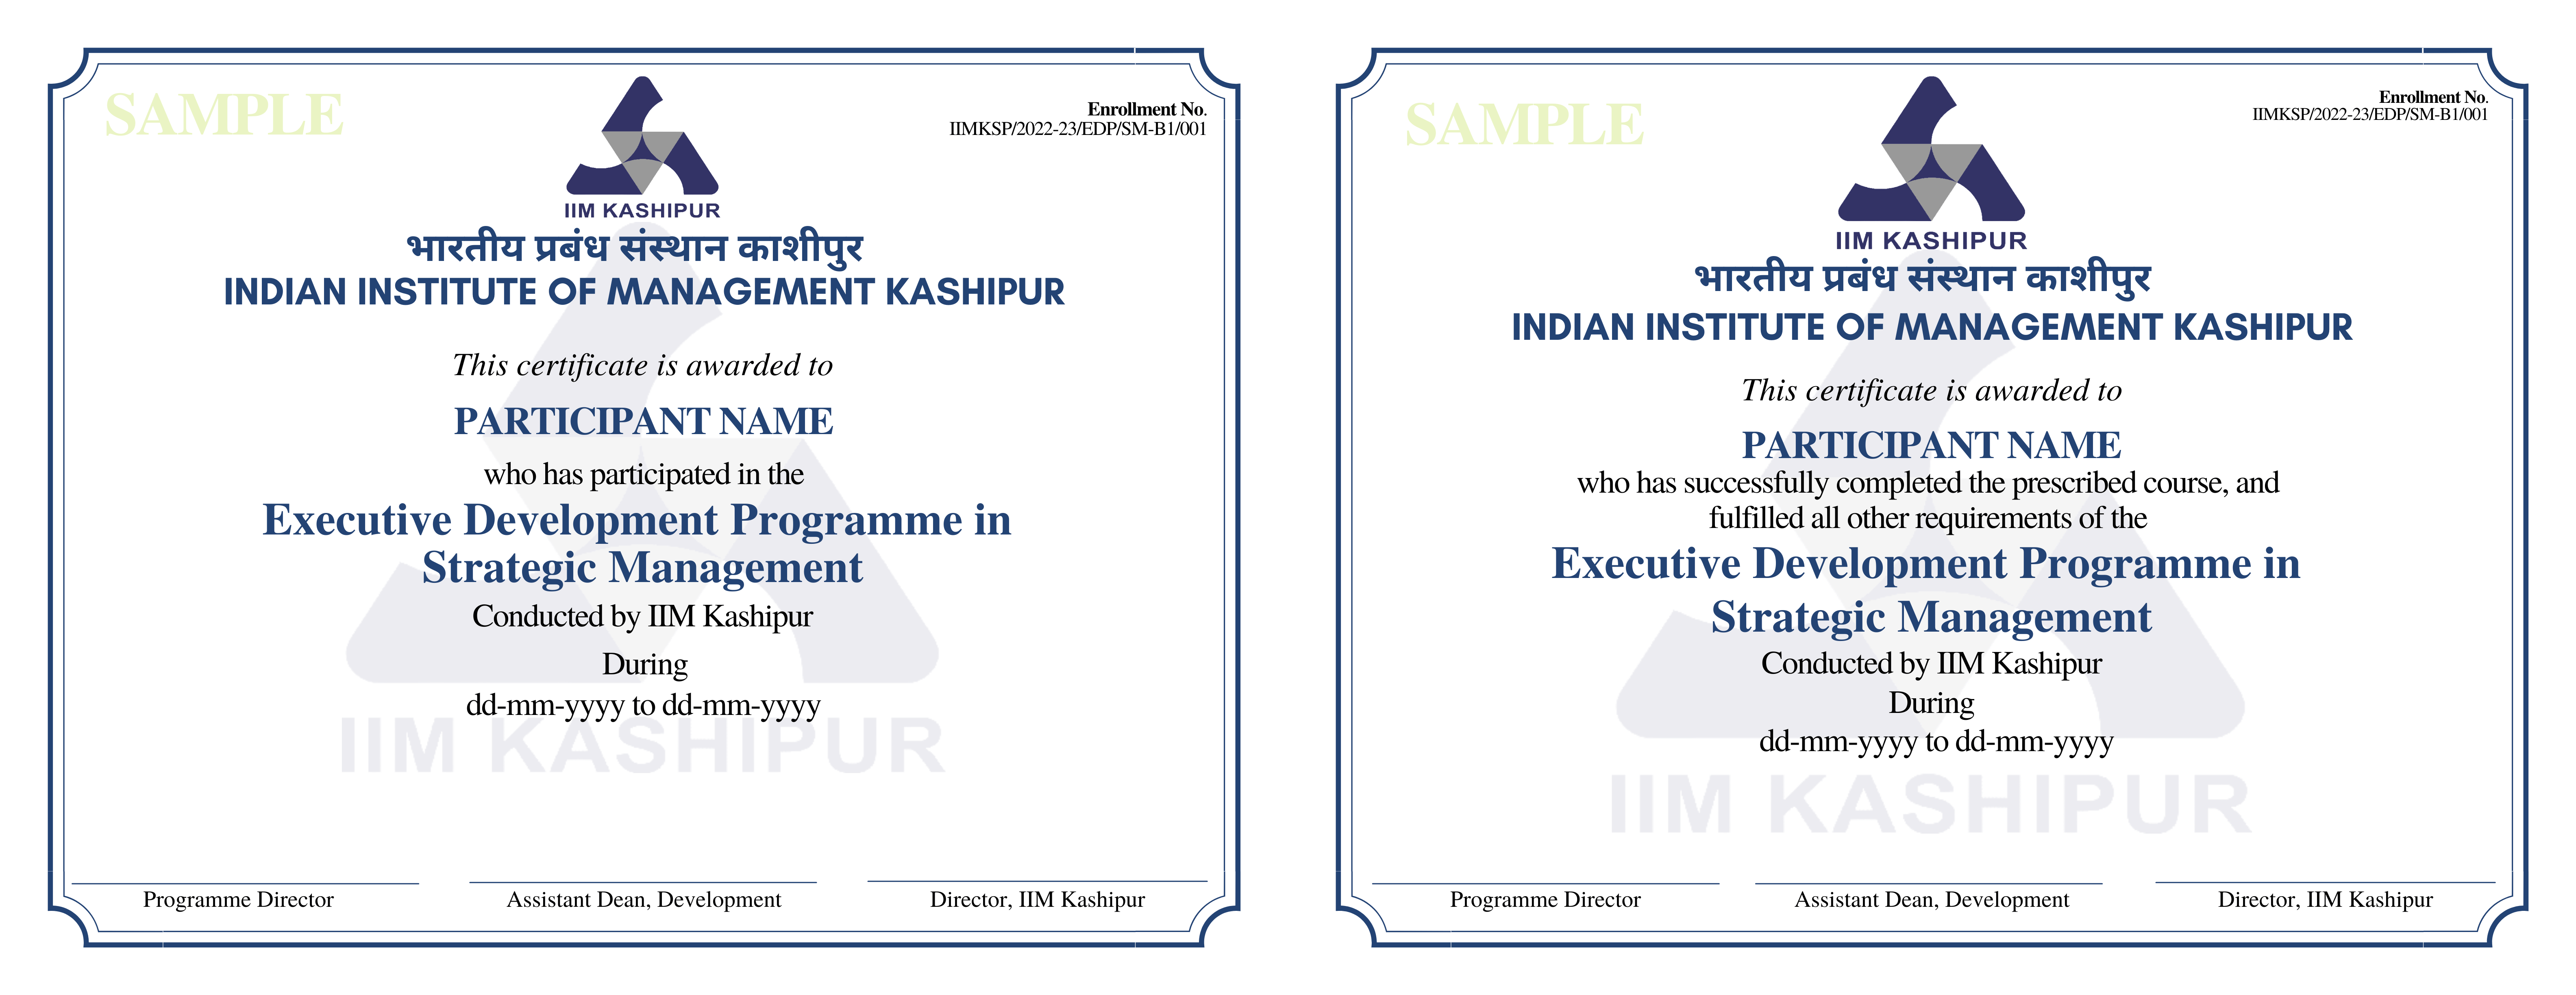 IIM Kashipur Strategic Management Certificate